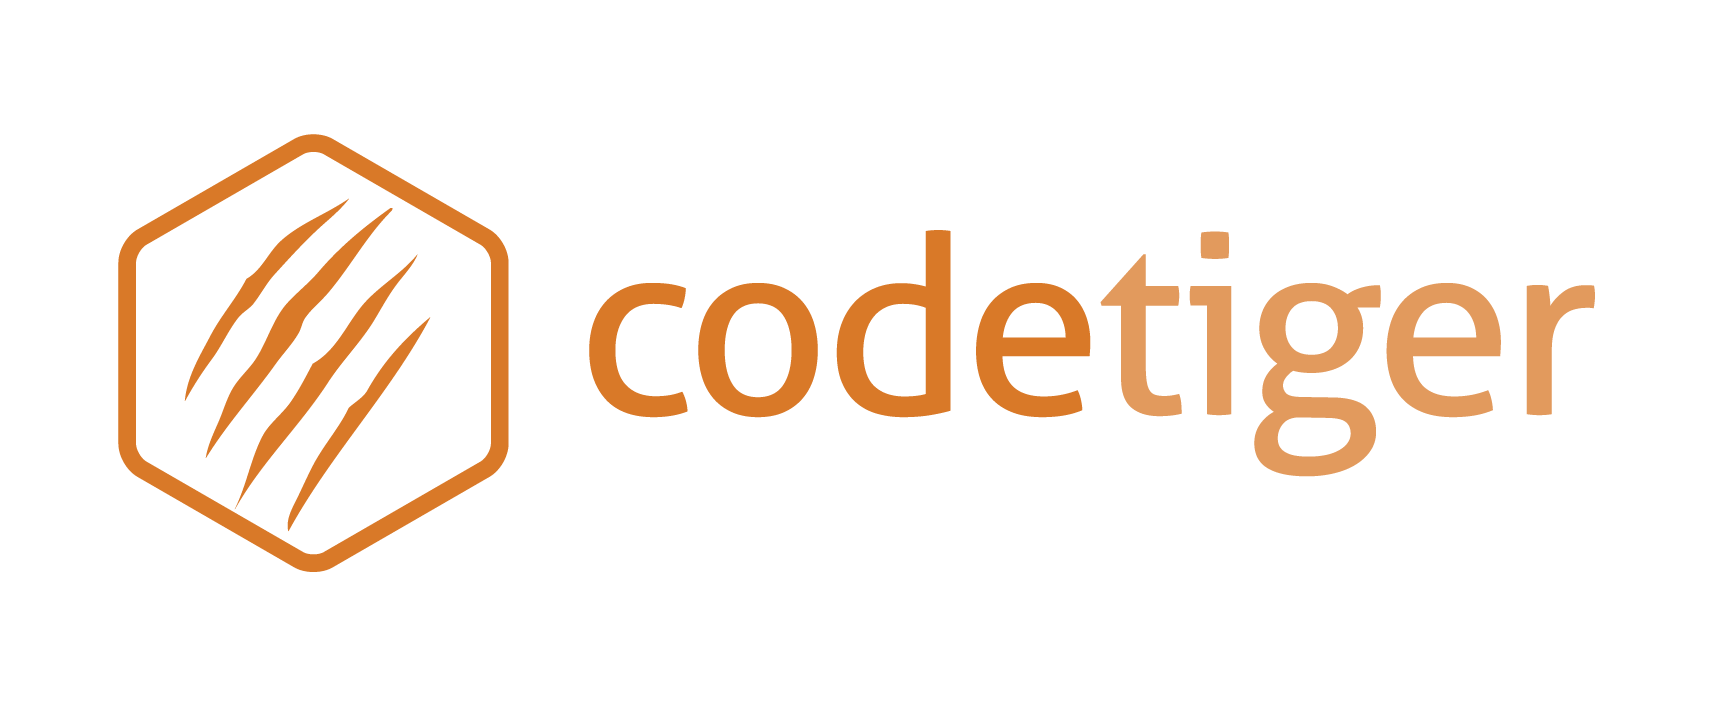 Codetiger logo